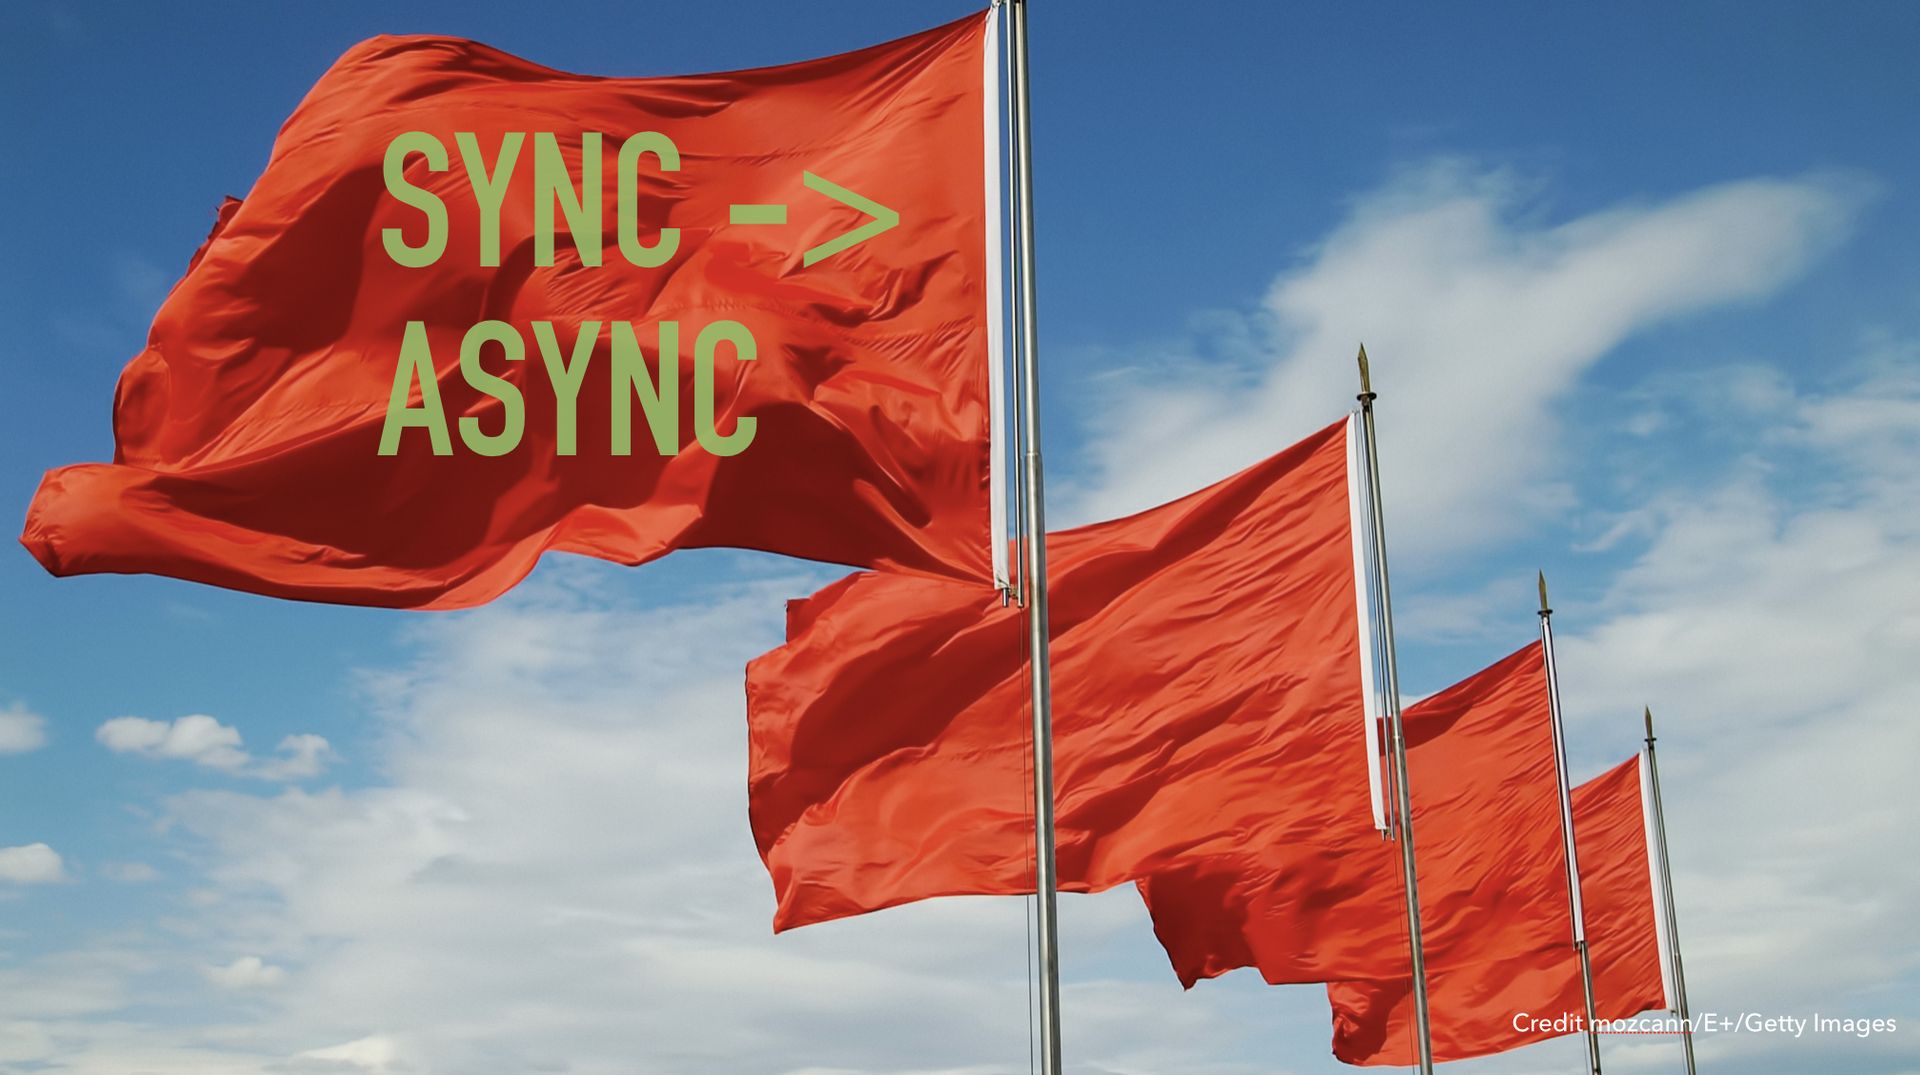 Slide text: Sync -> Async